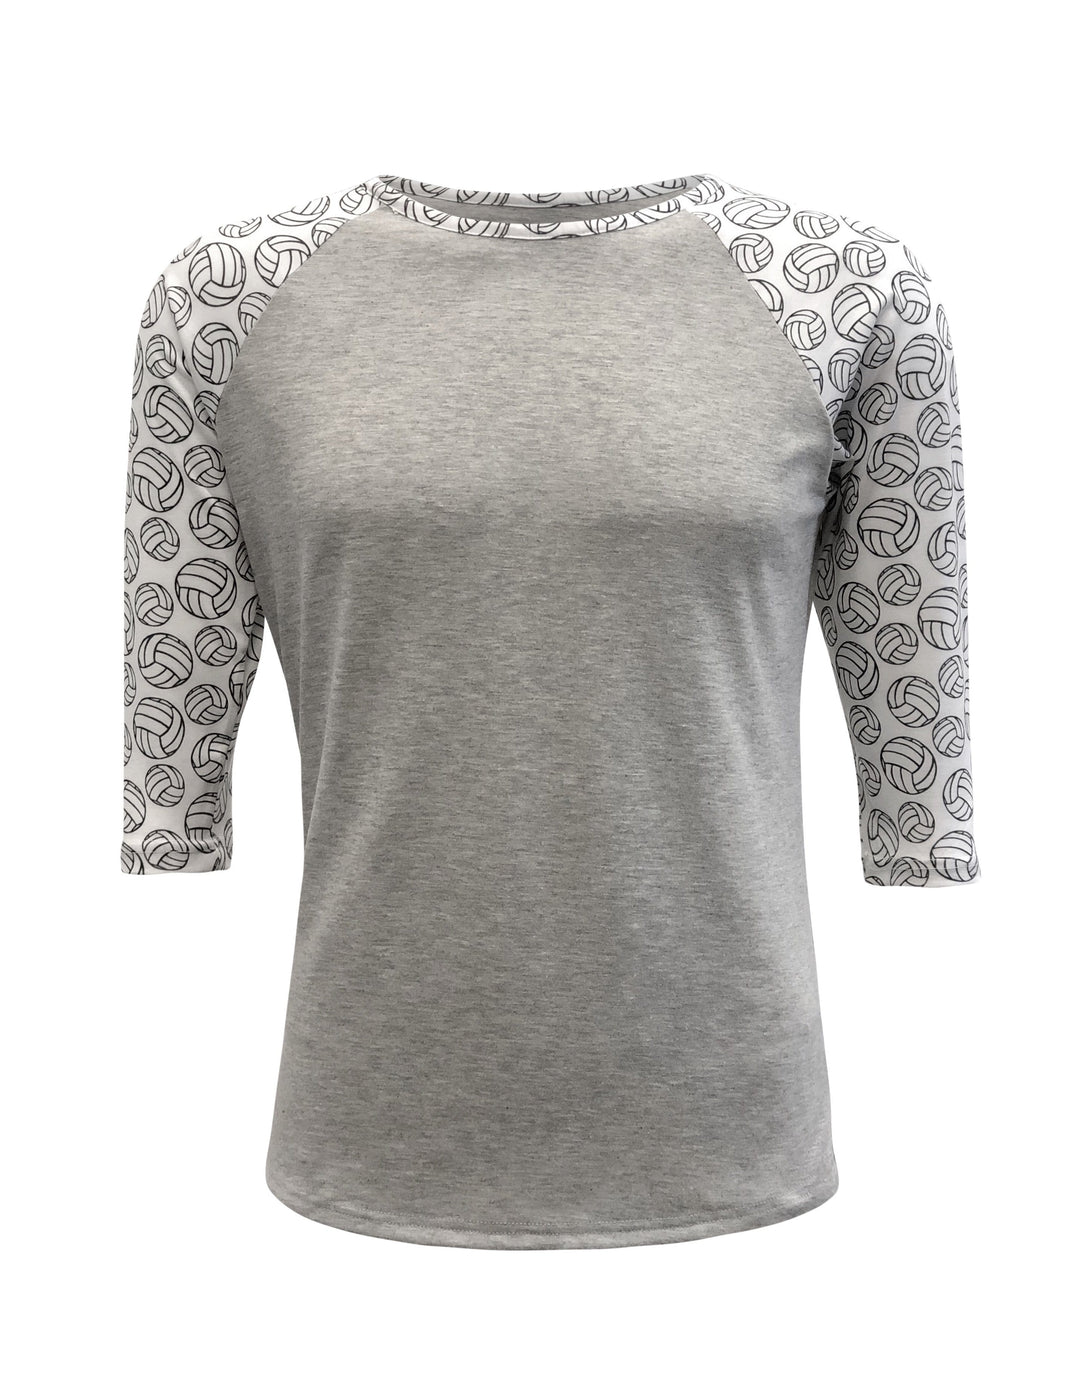 Volleyball Raglan- grey, high poly (great sublimation shirt!)